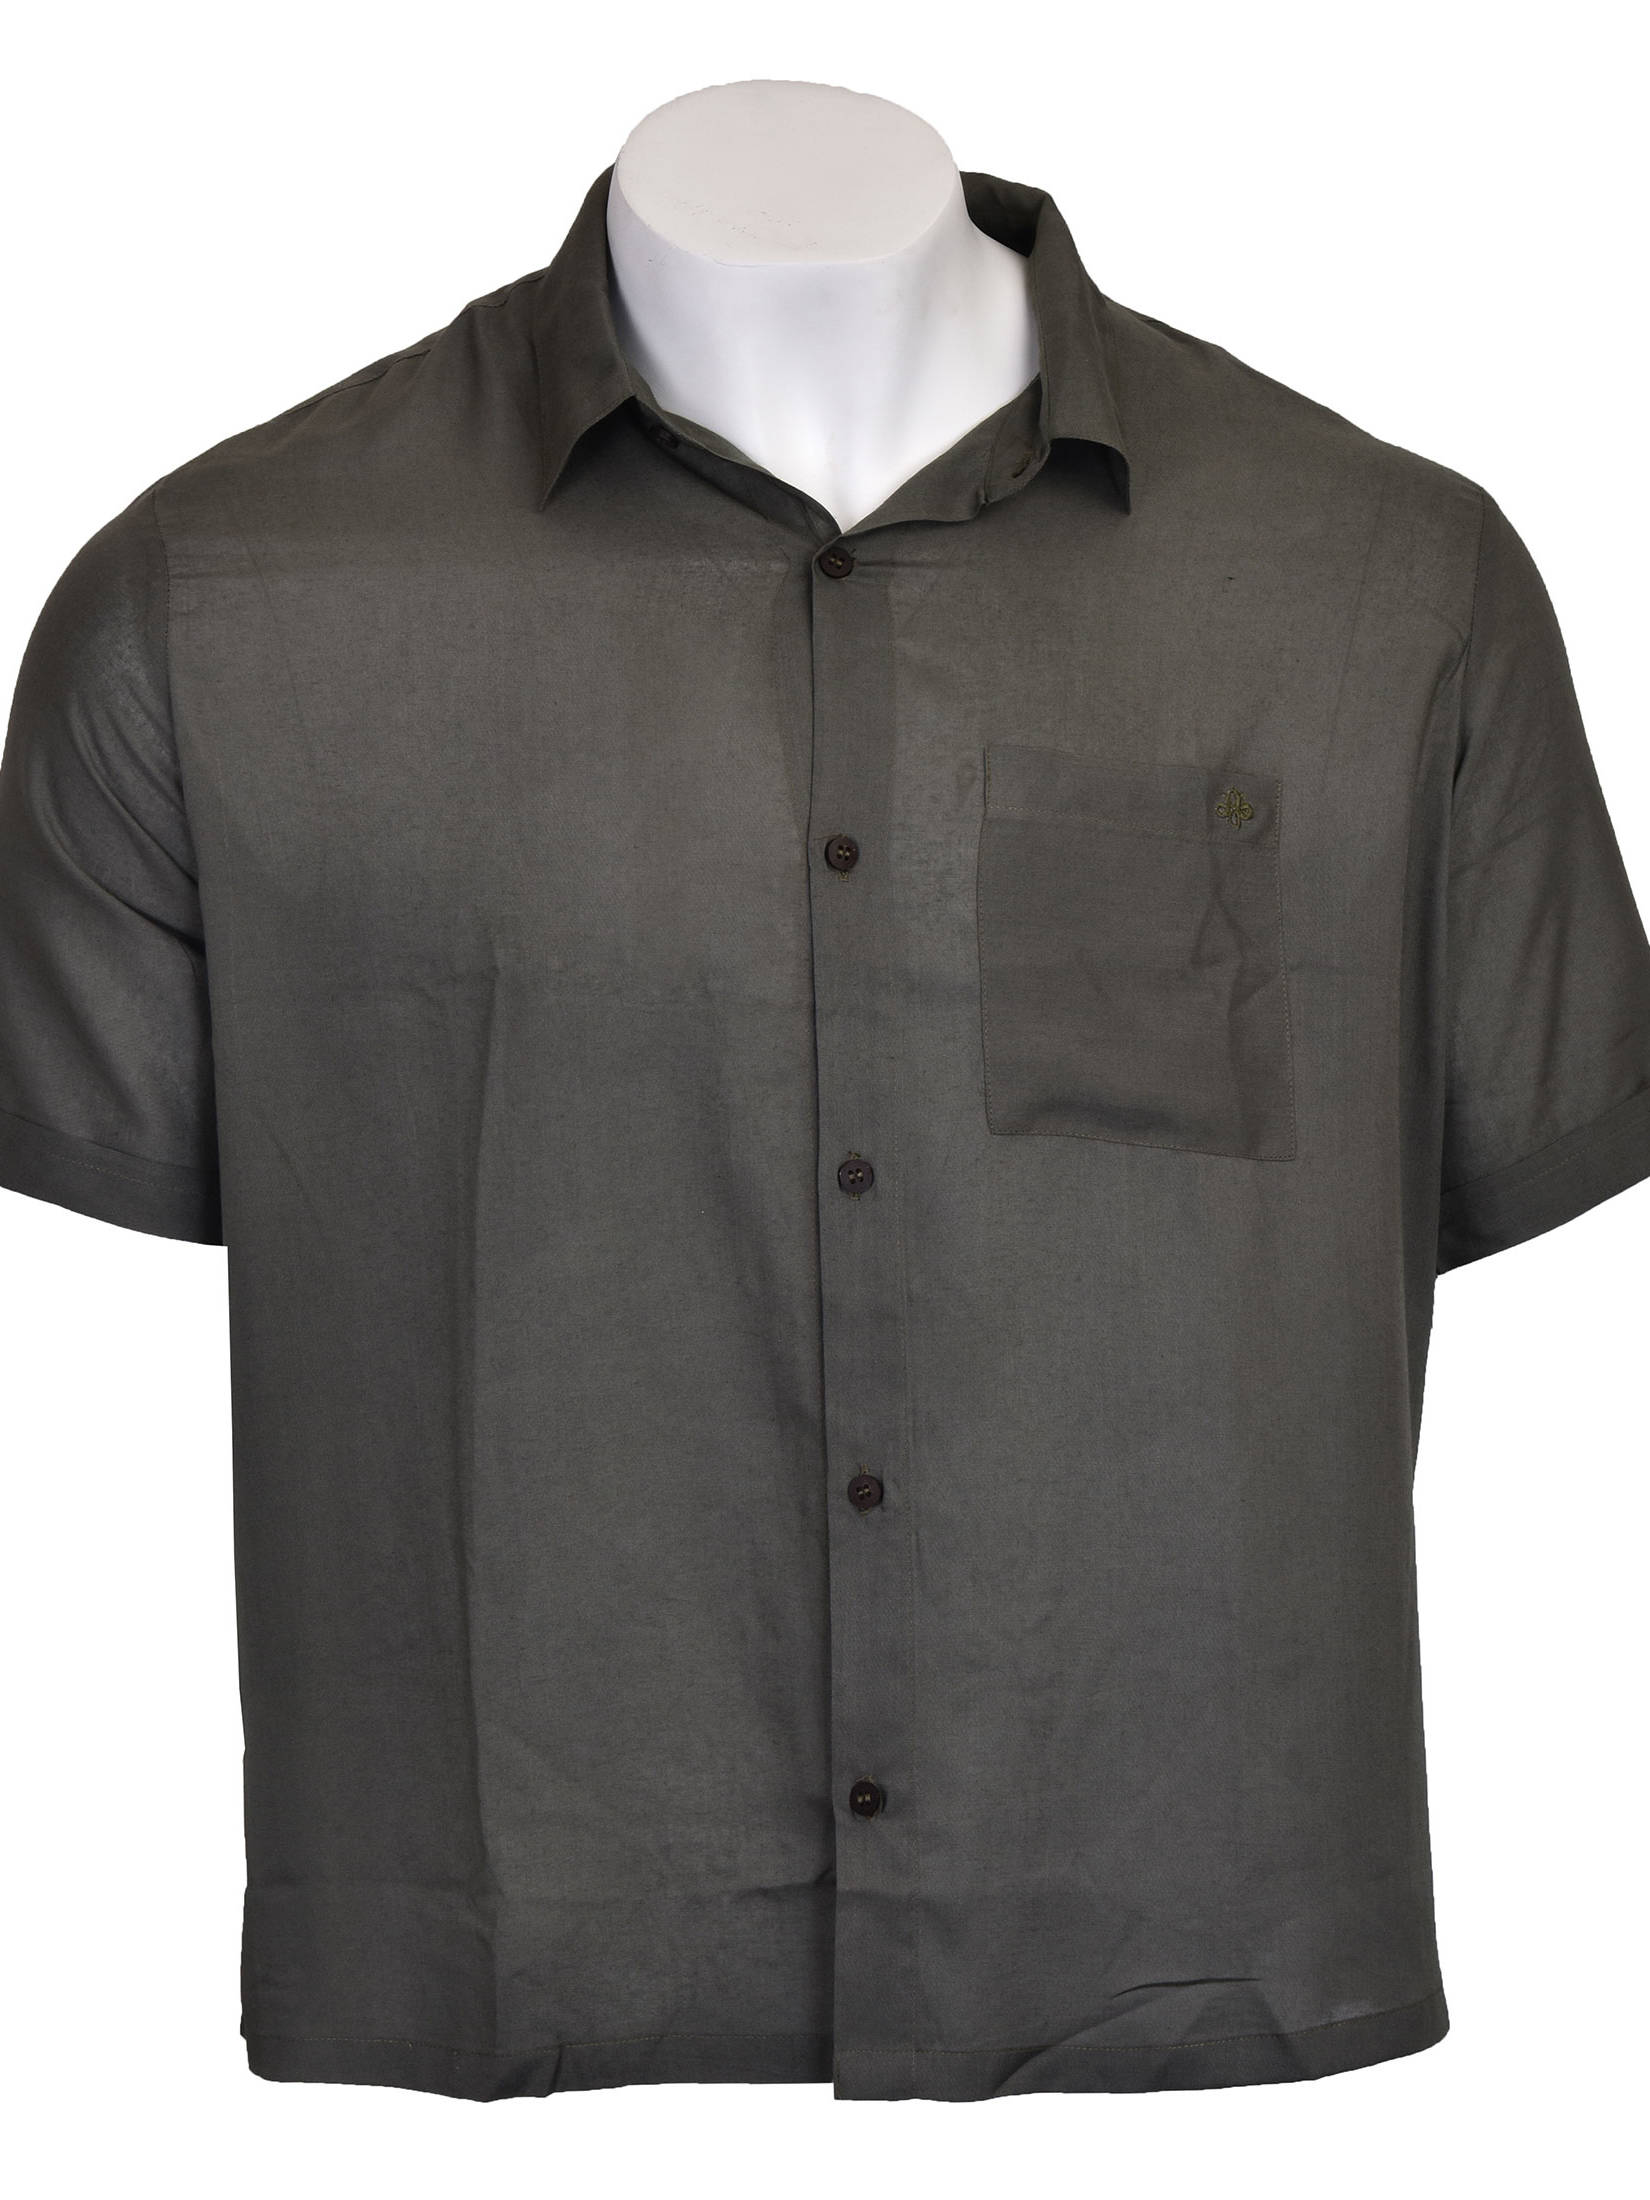 Tacana Rayon Shirt Short Sleeve Print 1 Front View